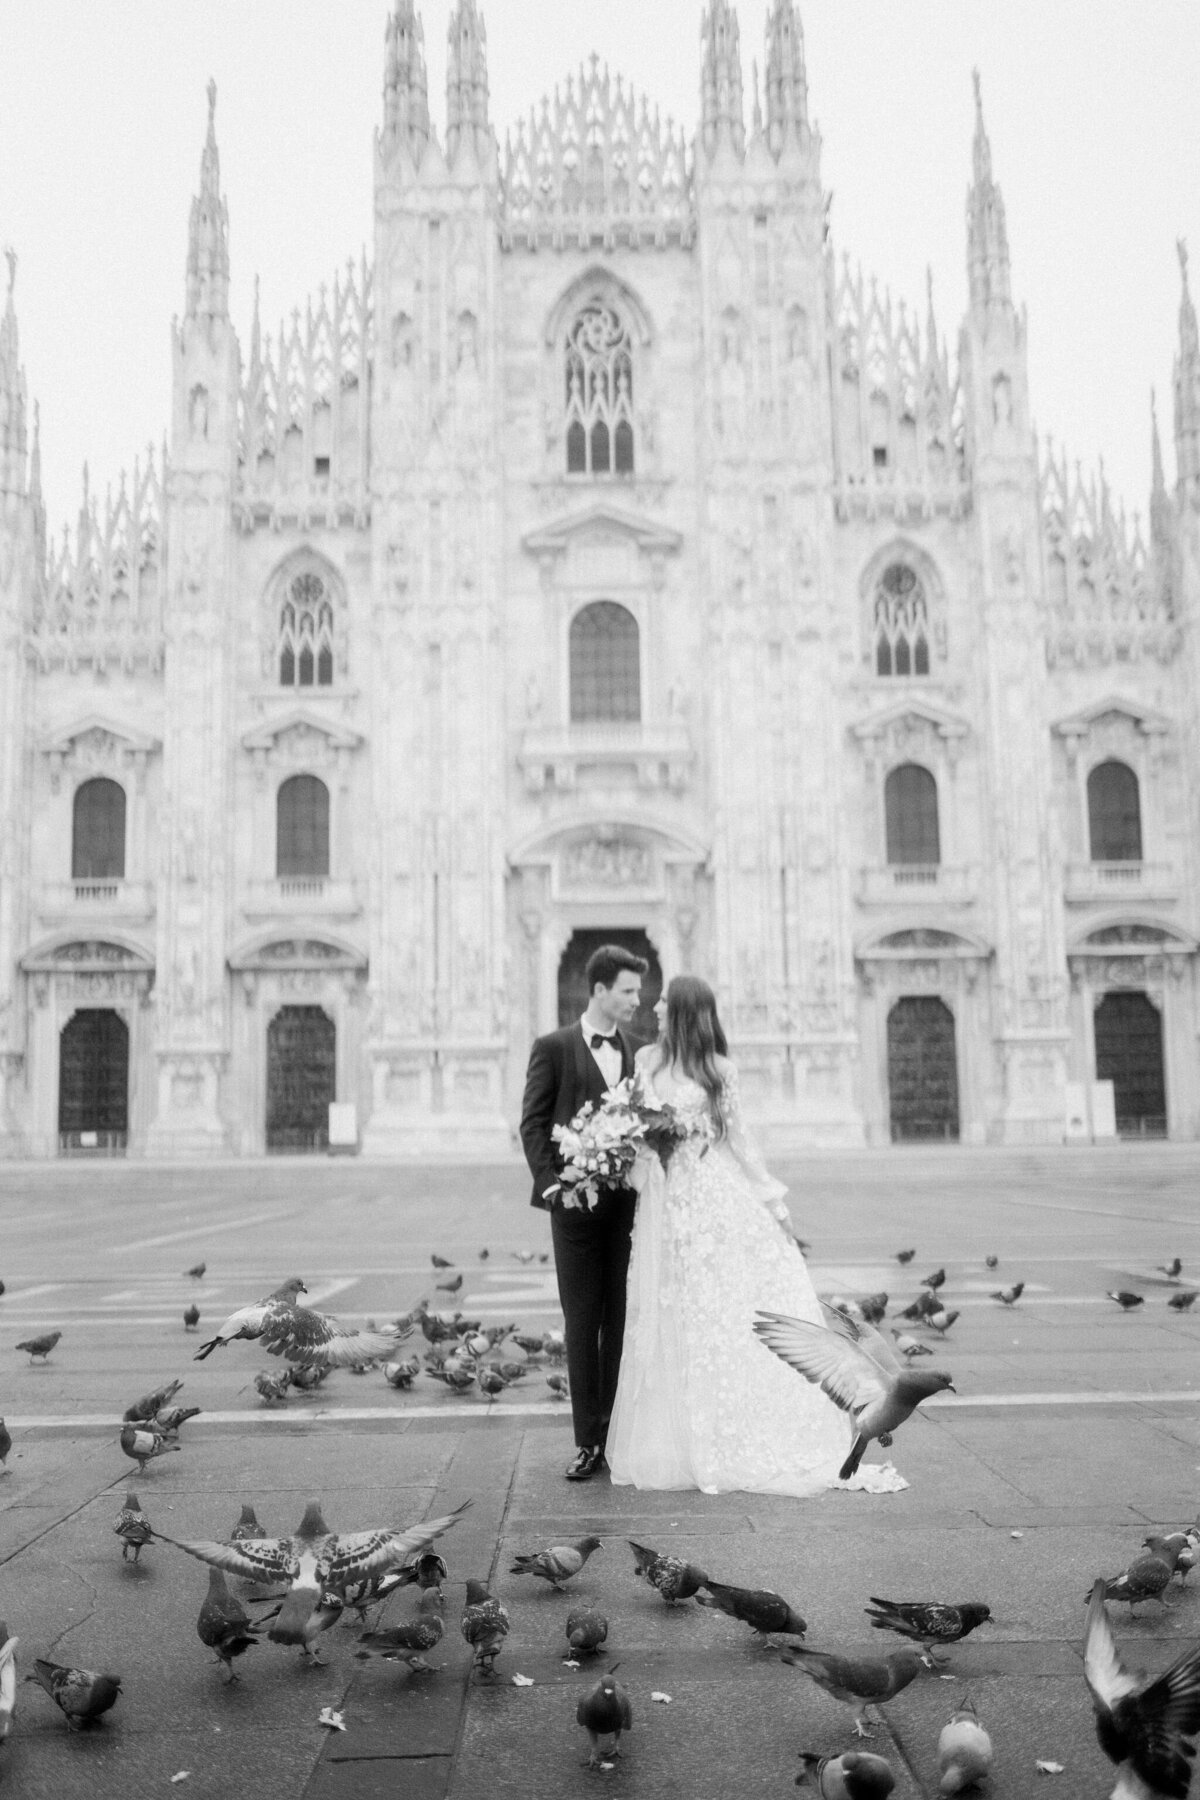 029-Milan-Duomo-Inspiration-Love-Story Elopement-Cinematic-Romance-Destination-Wedding-Editorial-Luxury-Fine-Art-Lisa-Vigliotta-Photography